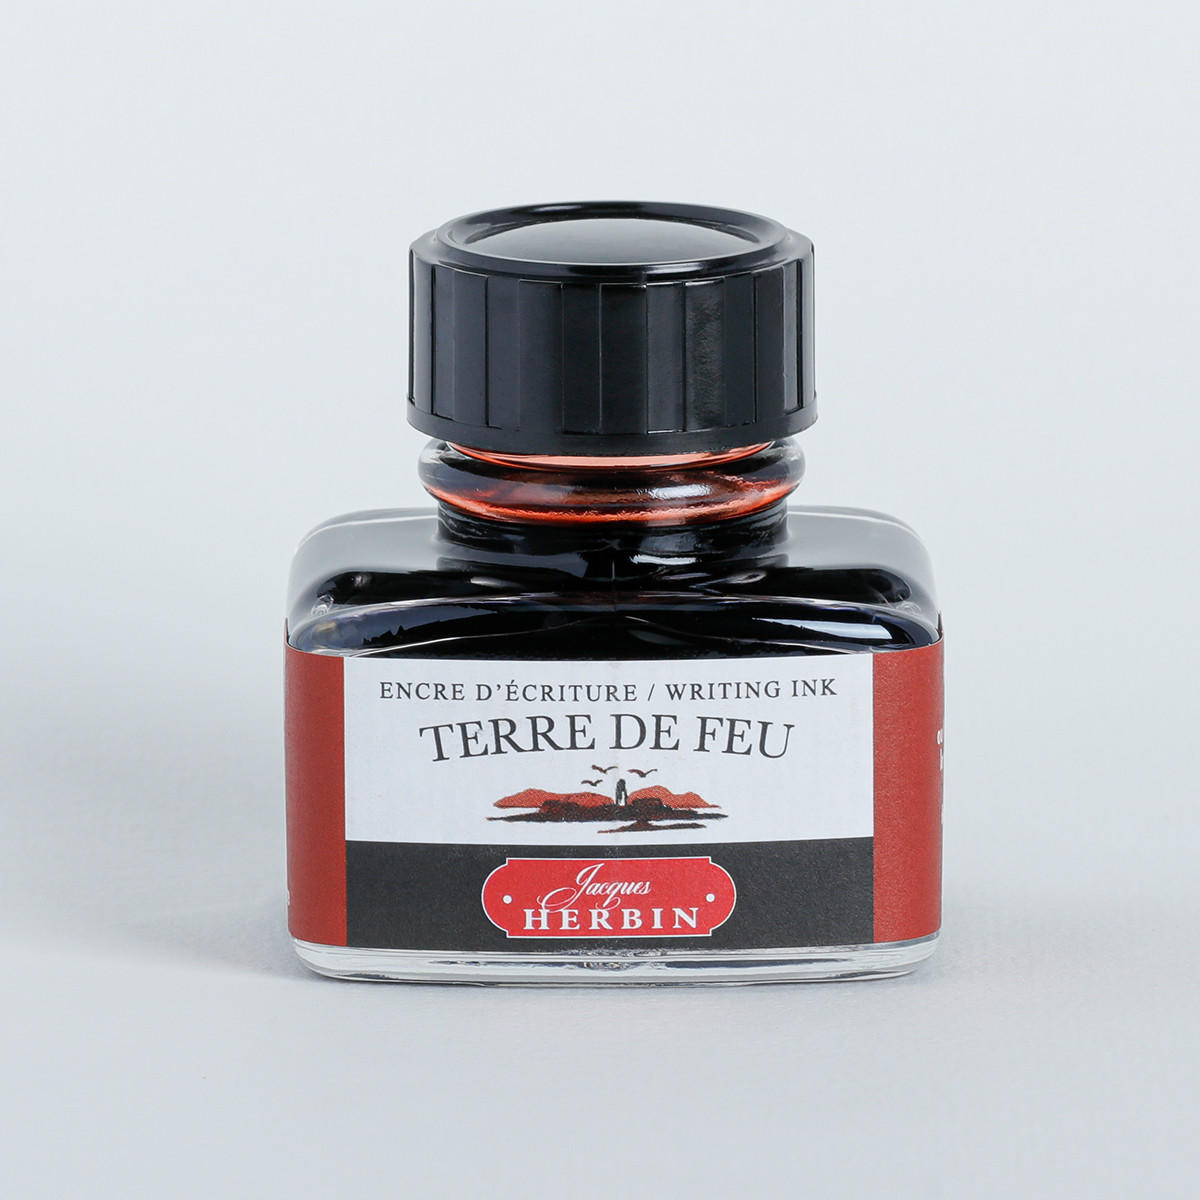 Herbin ’D’ Writing and Drawing Ink 30ml Terre de feu